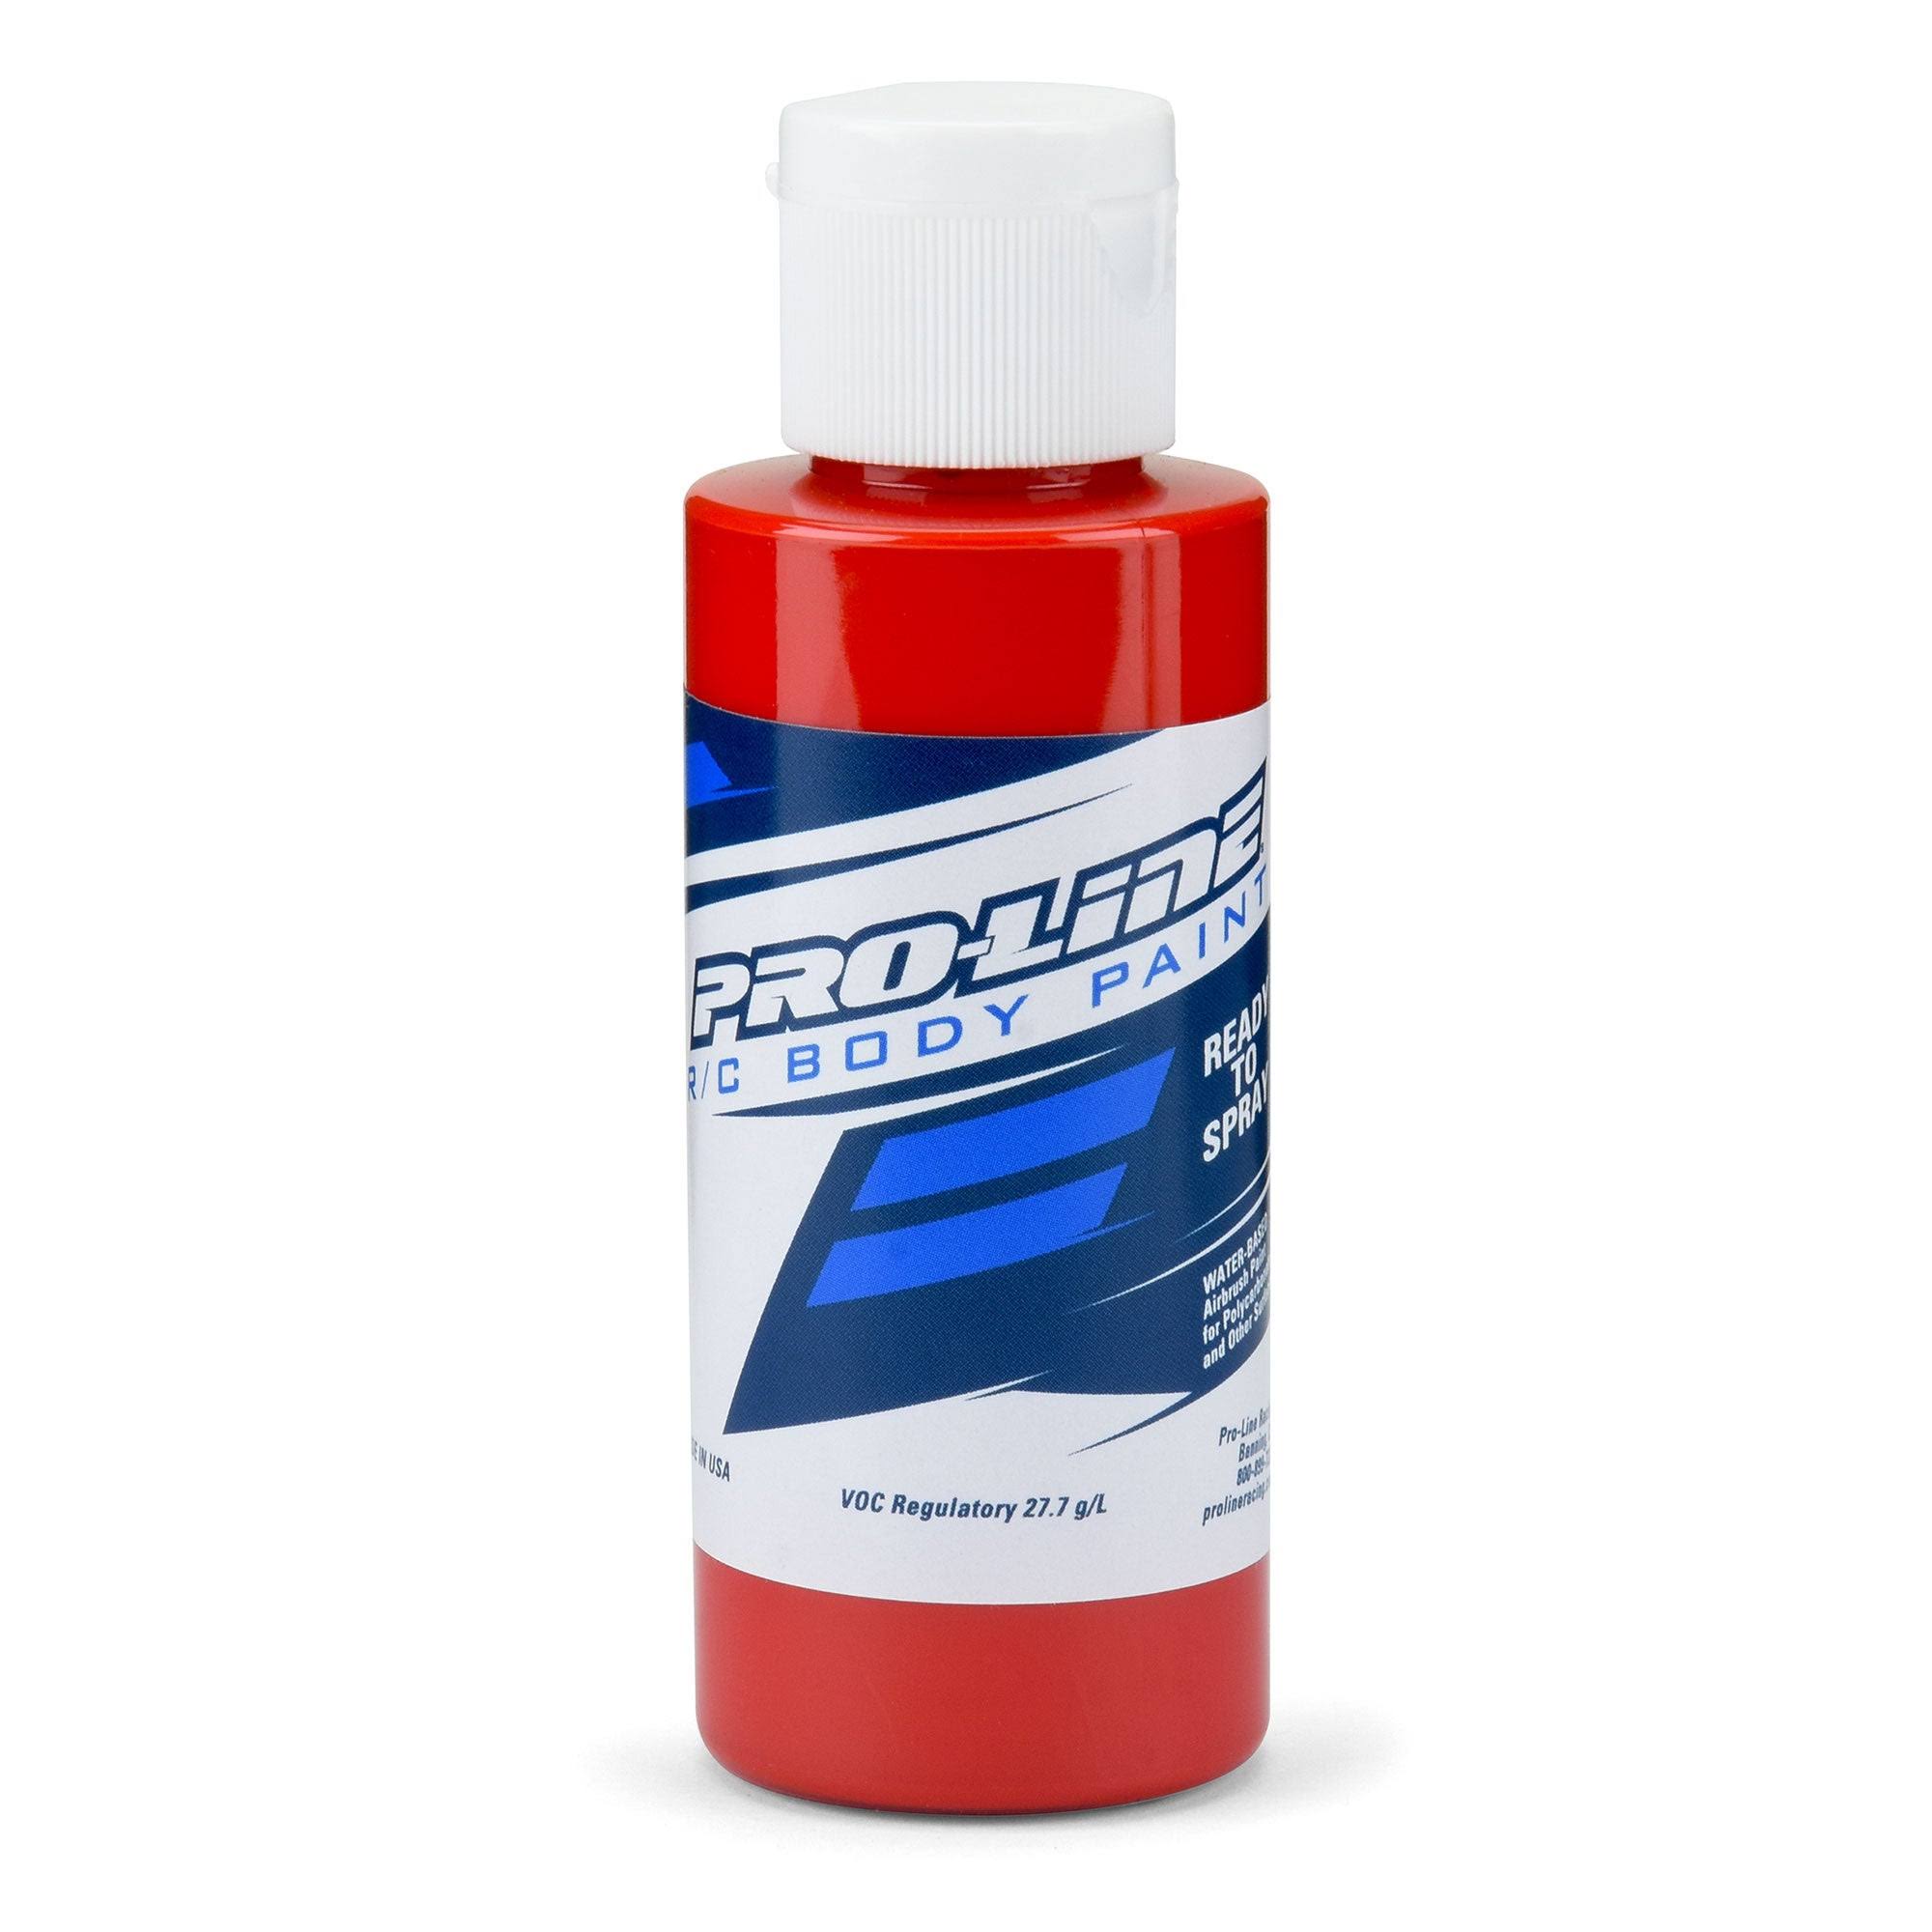 Proline Polycarbonate RC Body Paint - Red- 60ml - PR6325-02